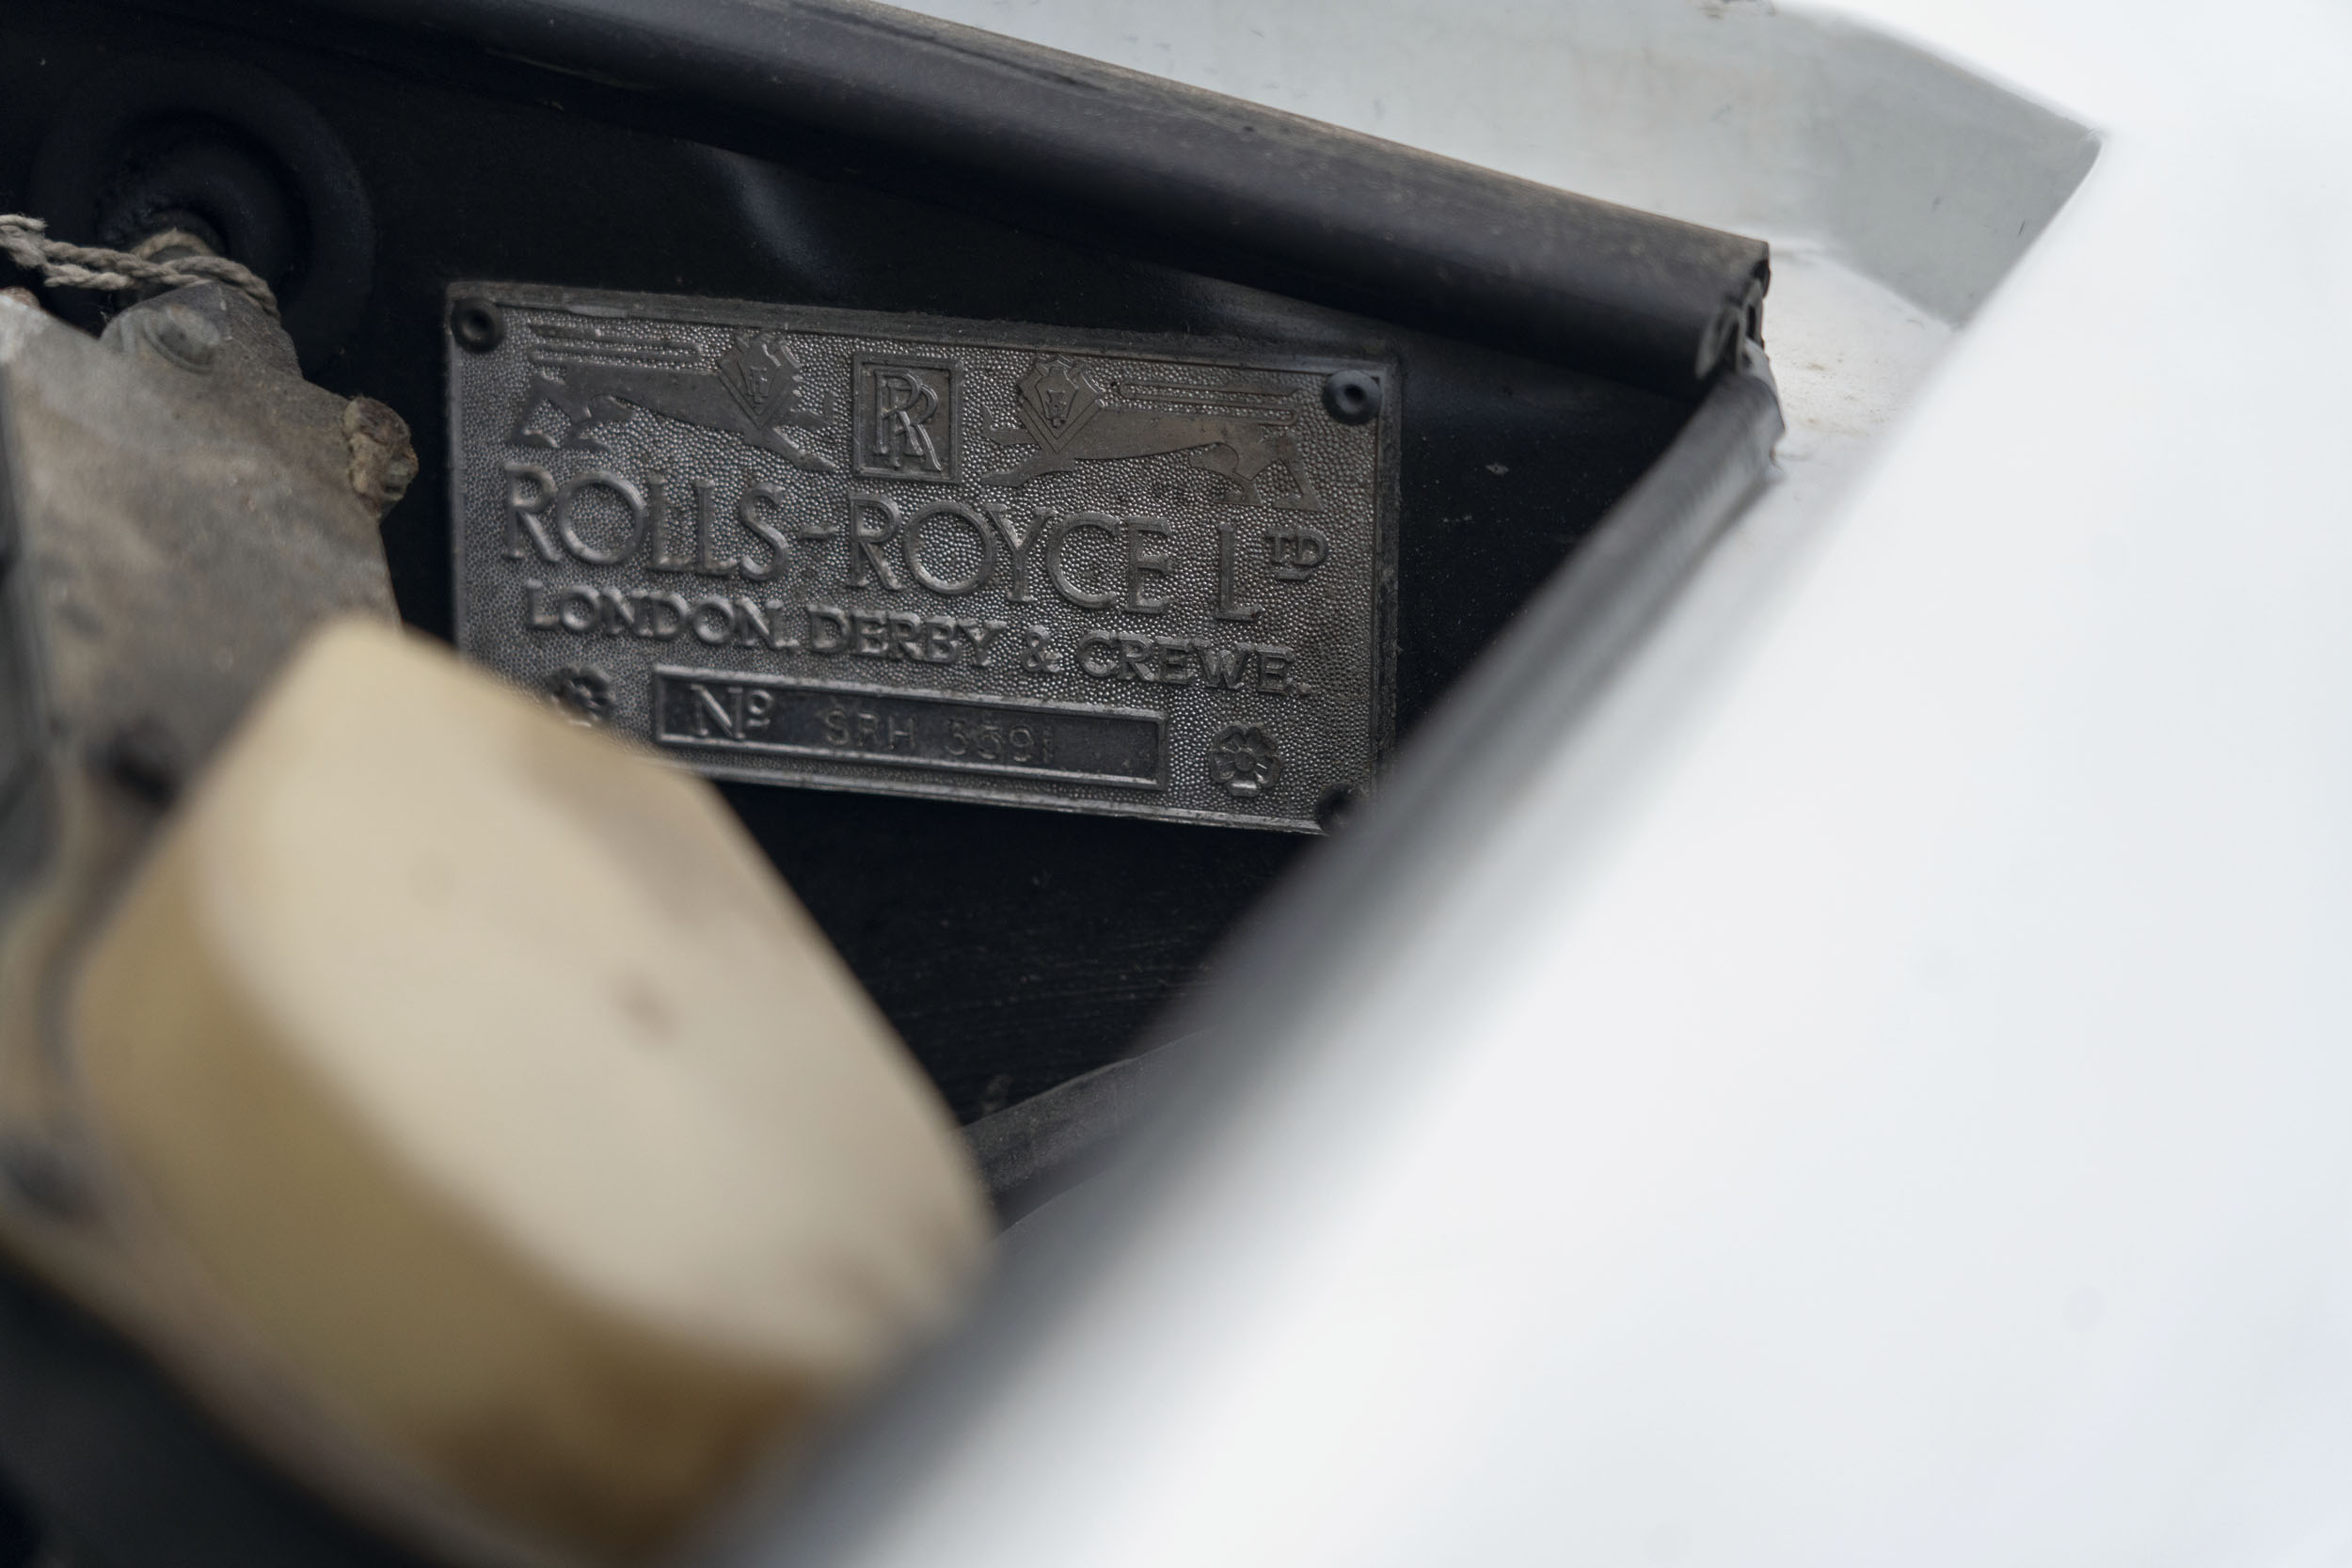 1977 ROLLS ROYCE SILVER SHADOW III - Image 6 of 6